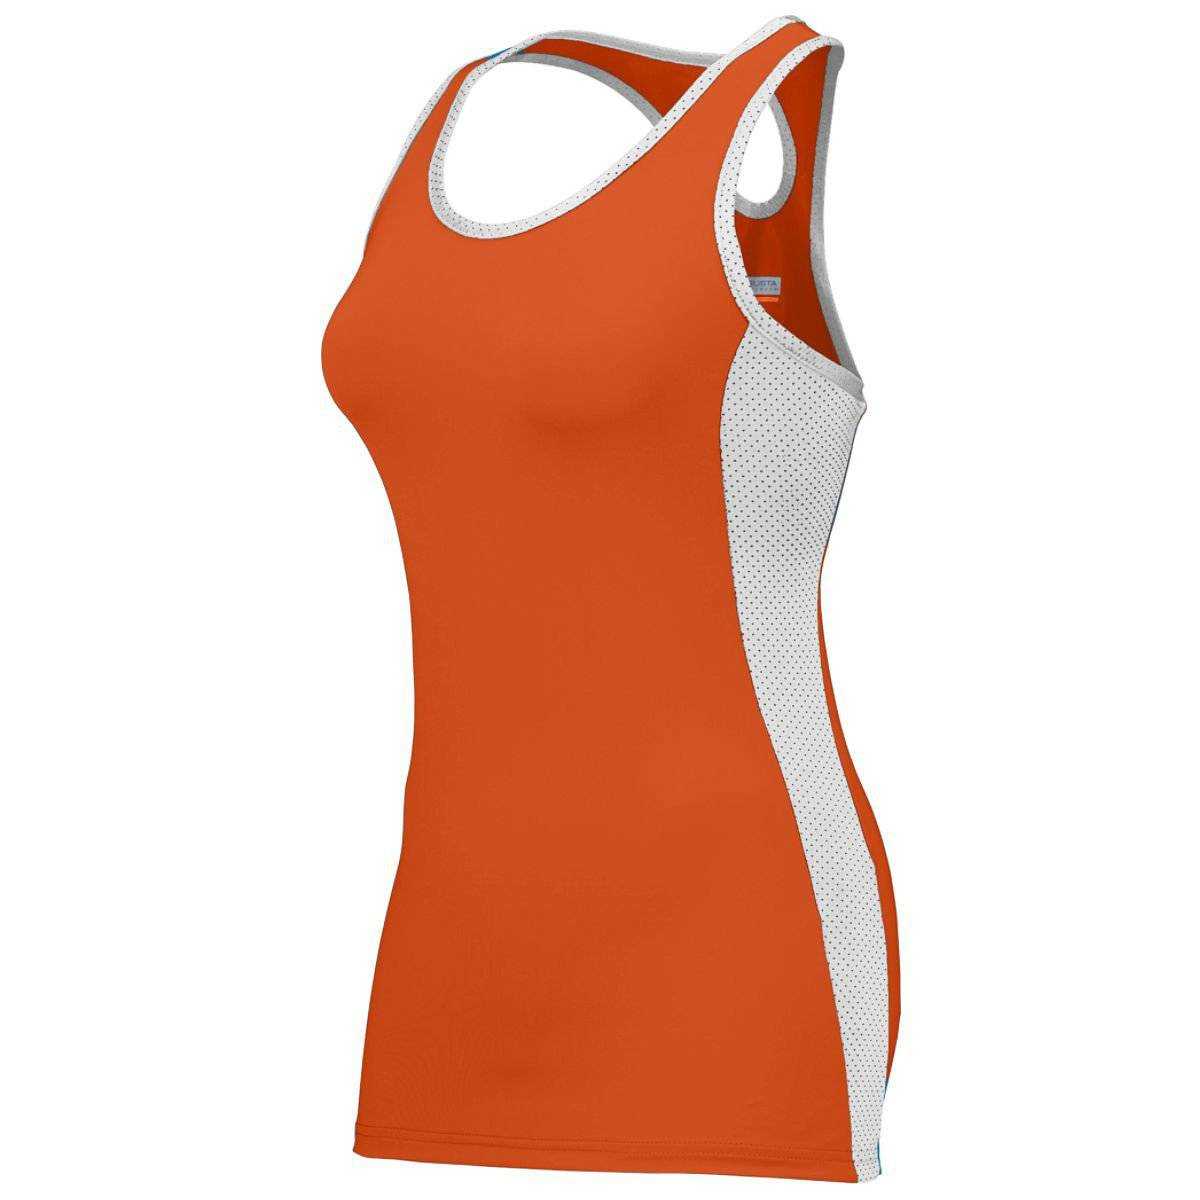 Augusta 1279 Girls Action Jersey - Orange White - HIT a Double